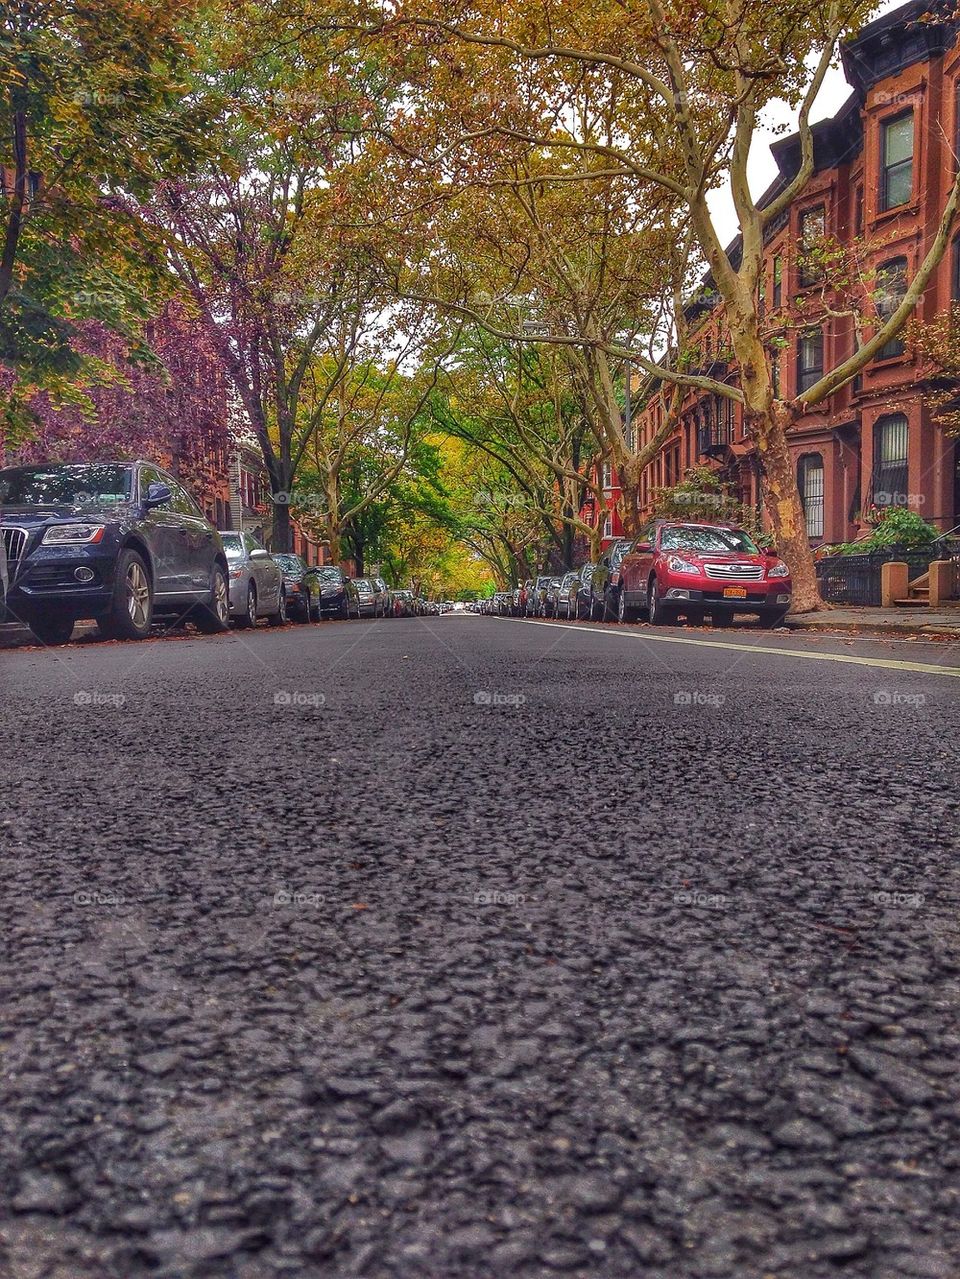 The fall street